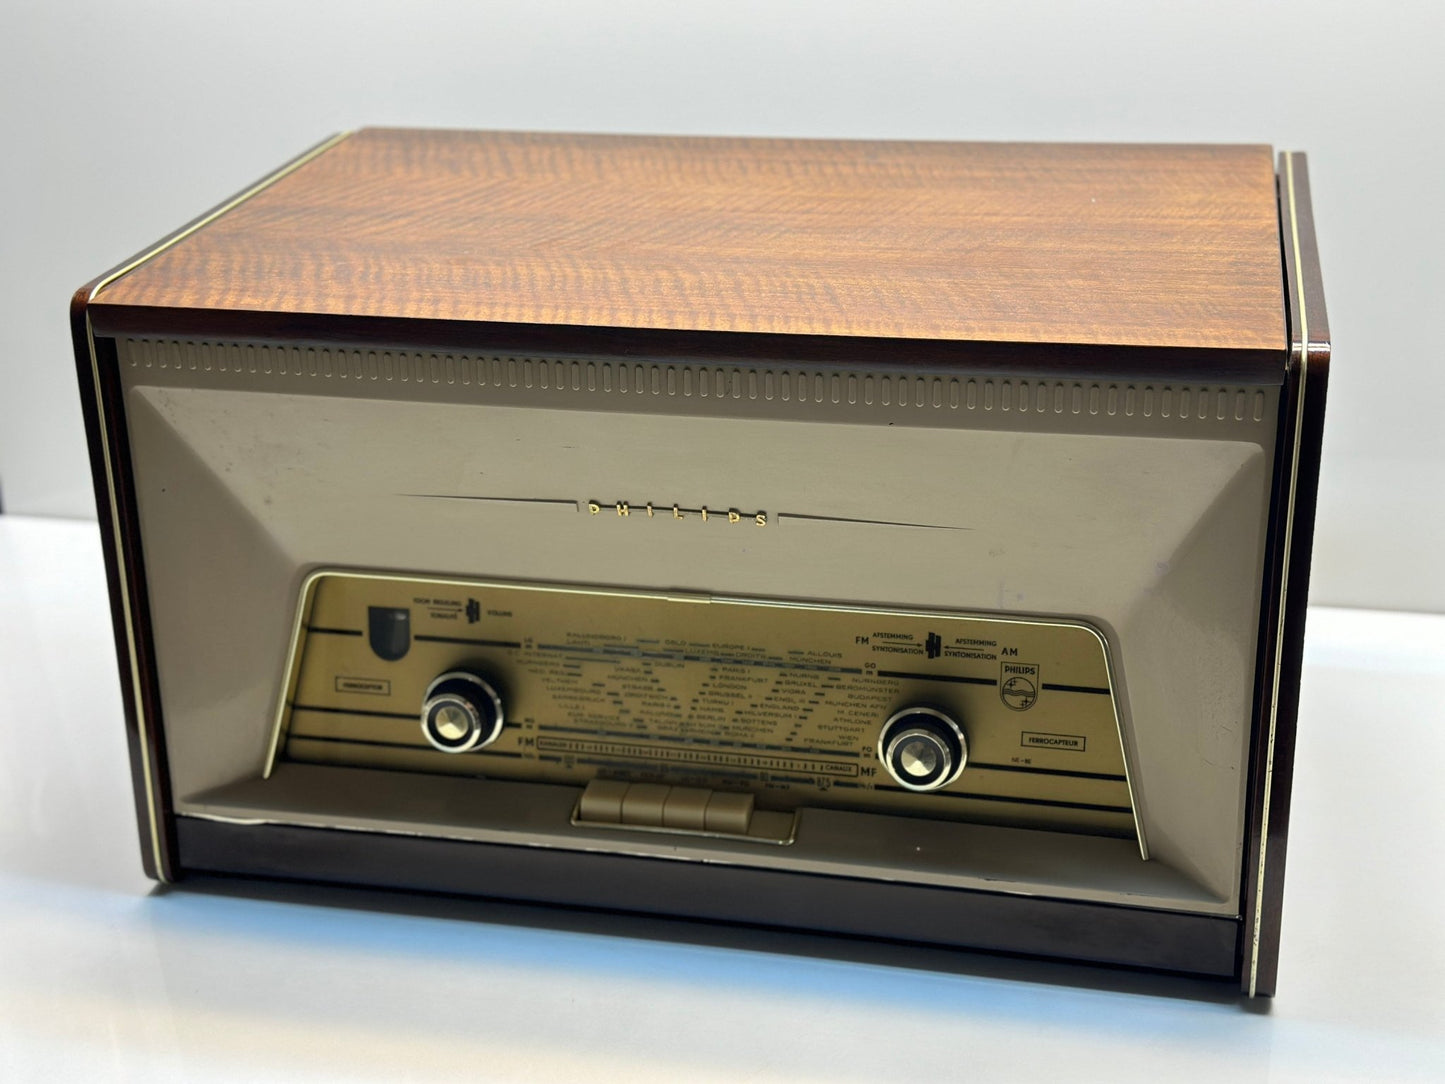 Antique Philips Radio and Record Player - Walnut Finish, Taba Patterns, Refurbished